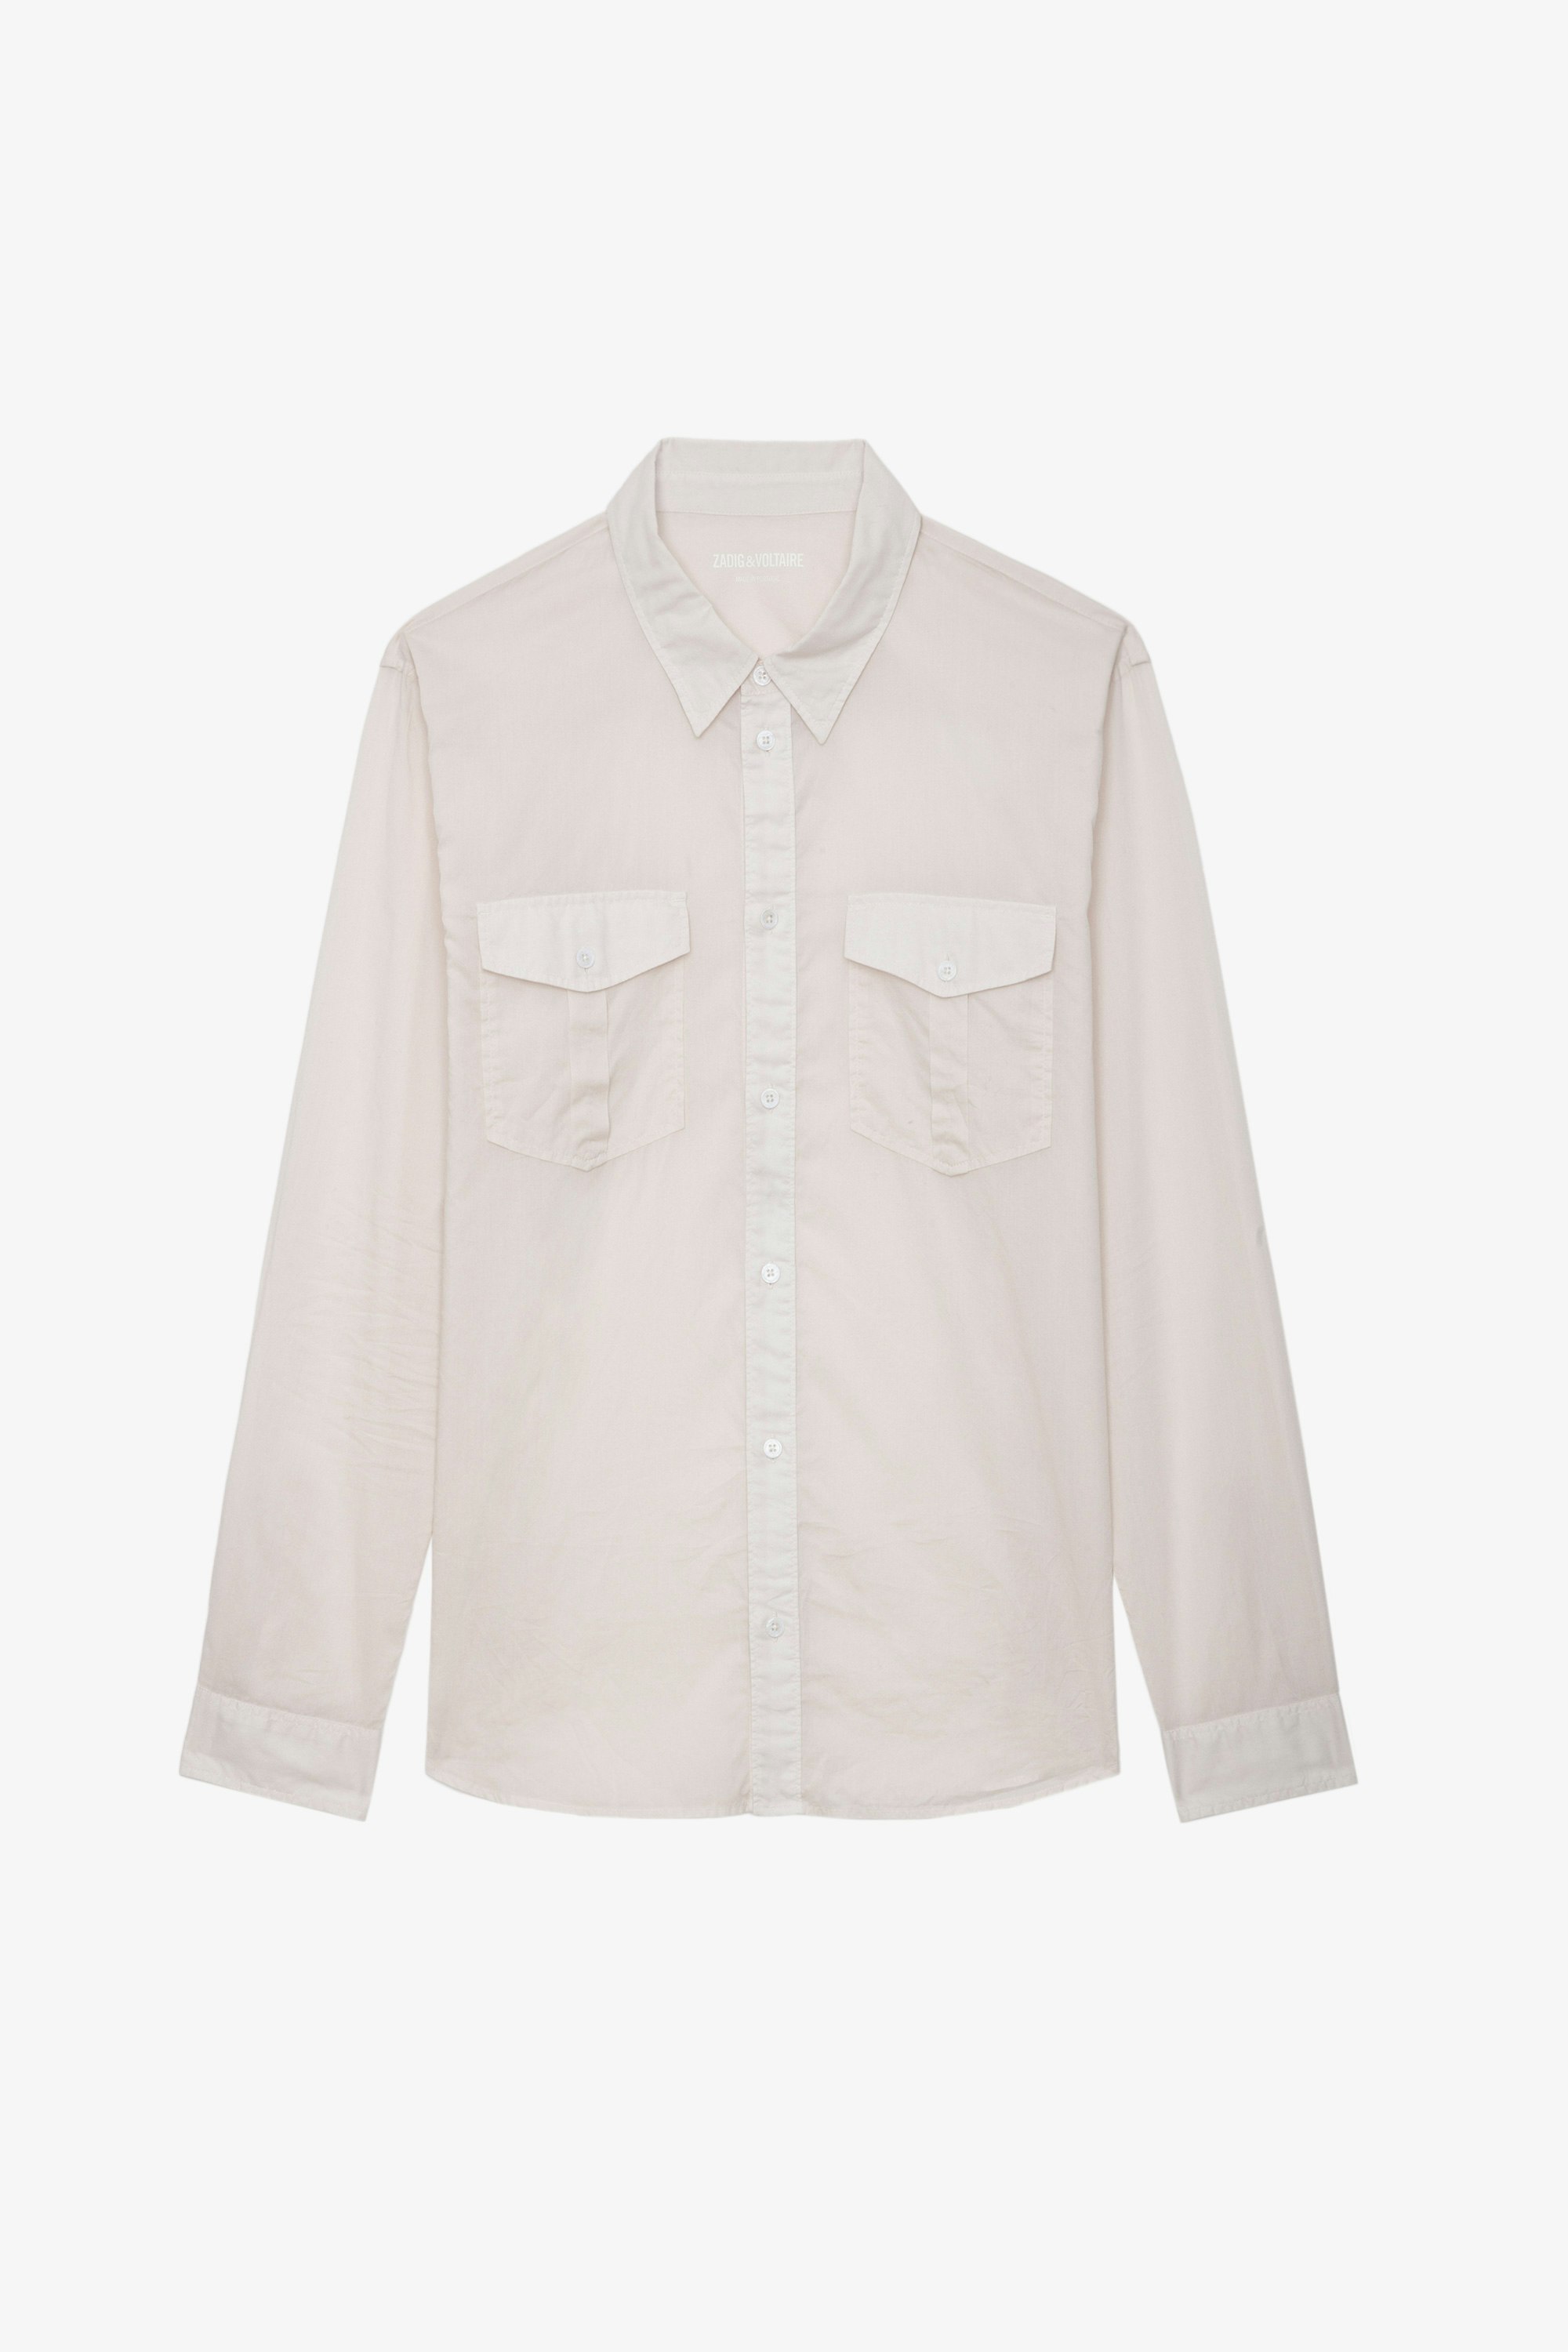 Camicia Thibault - Camicia in voile di cotone rosa pallido a maniche lunghe.